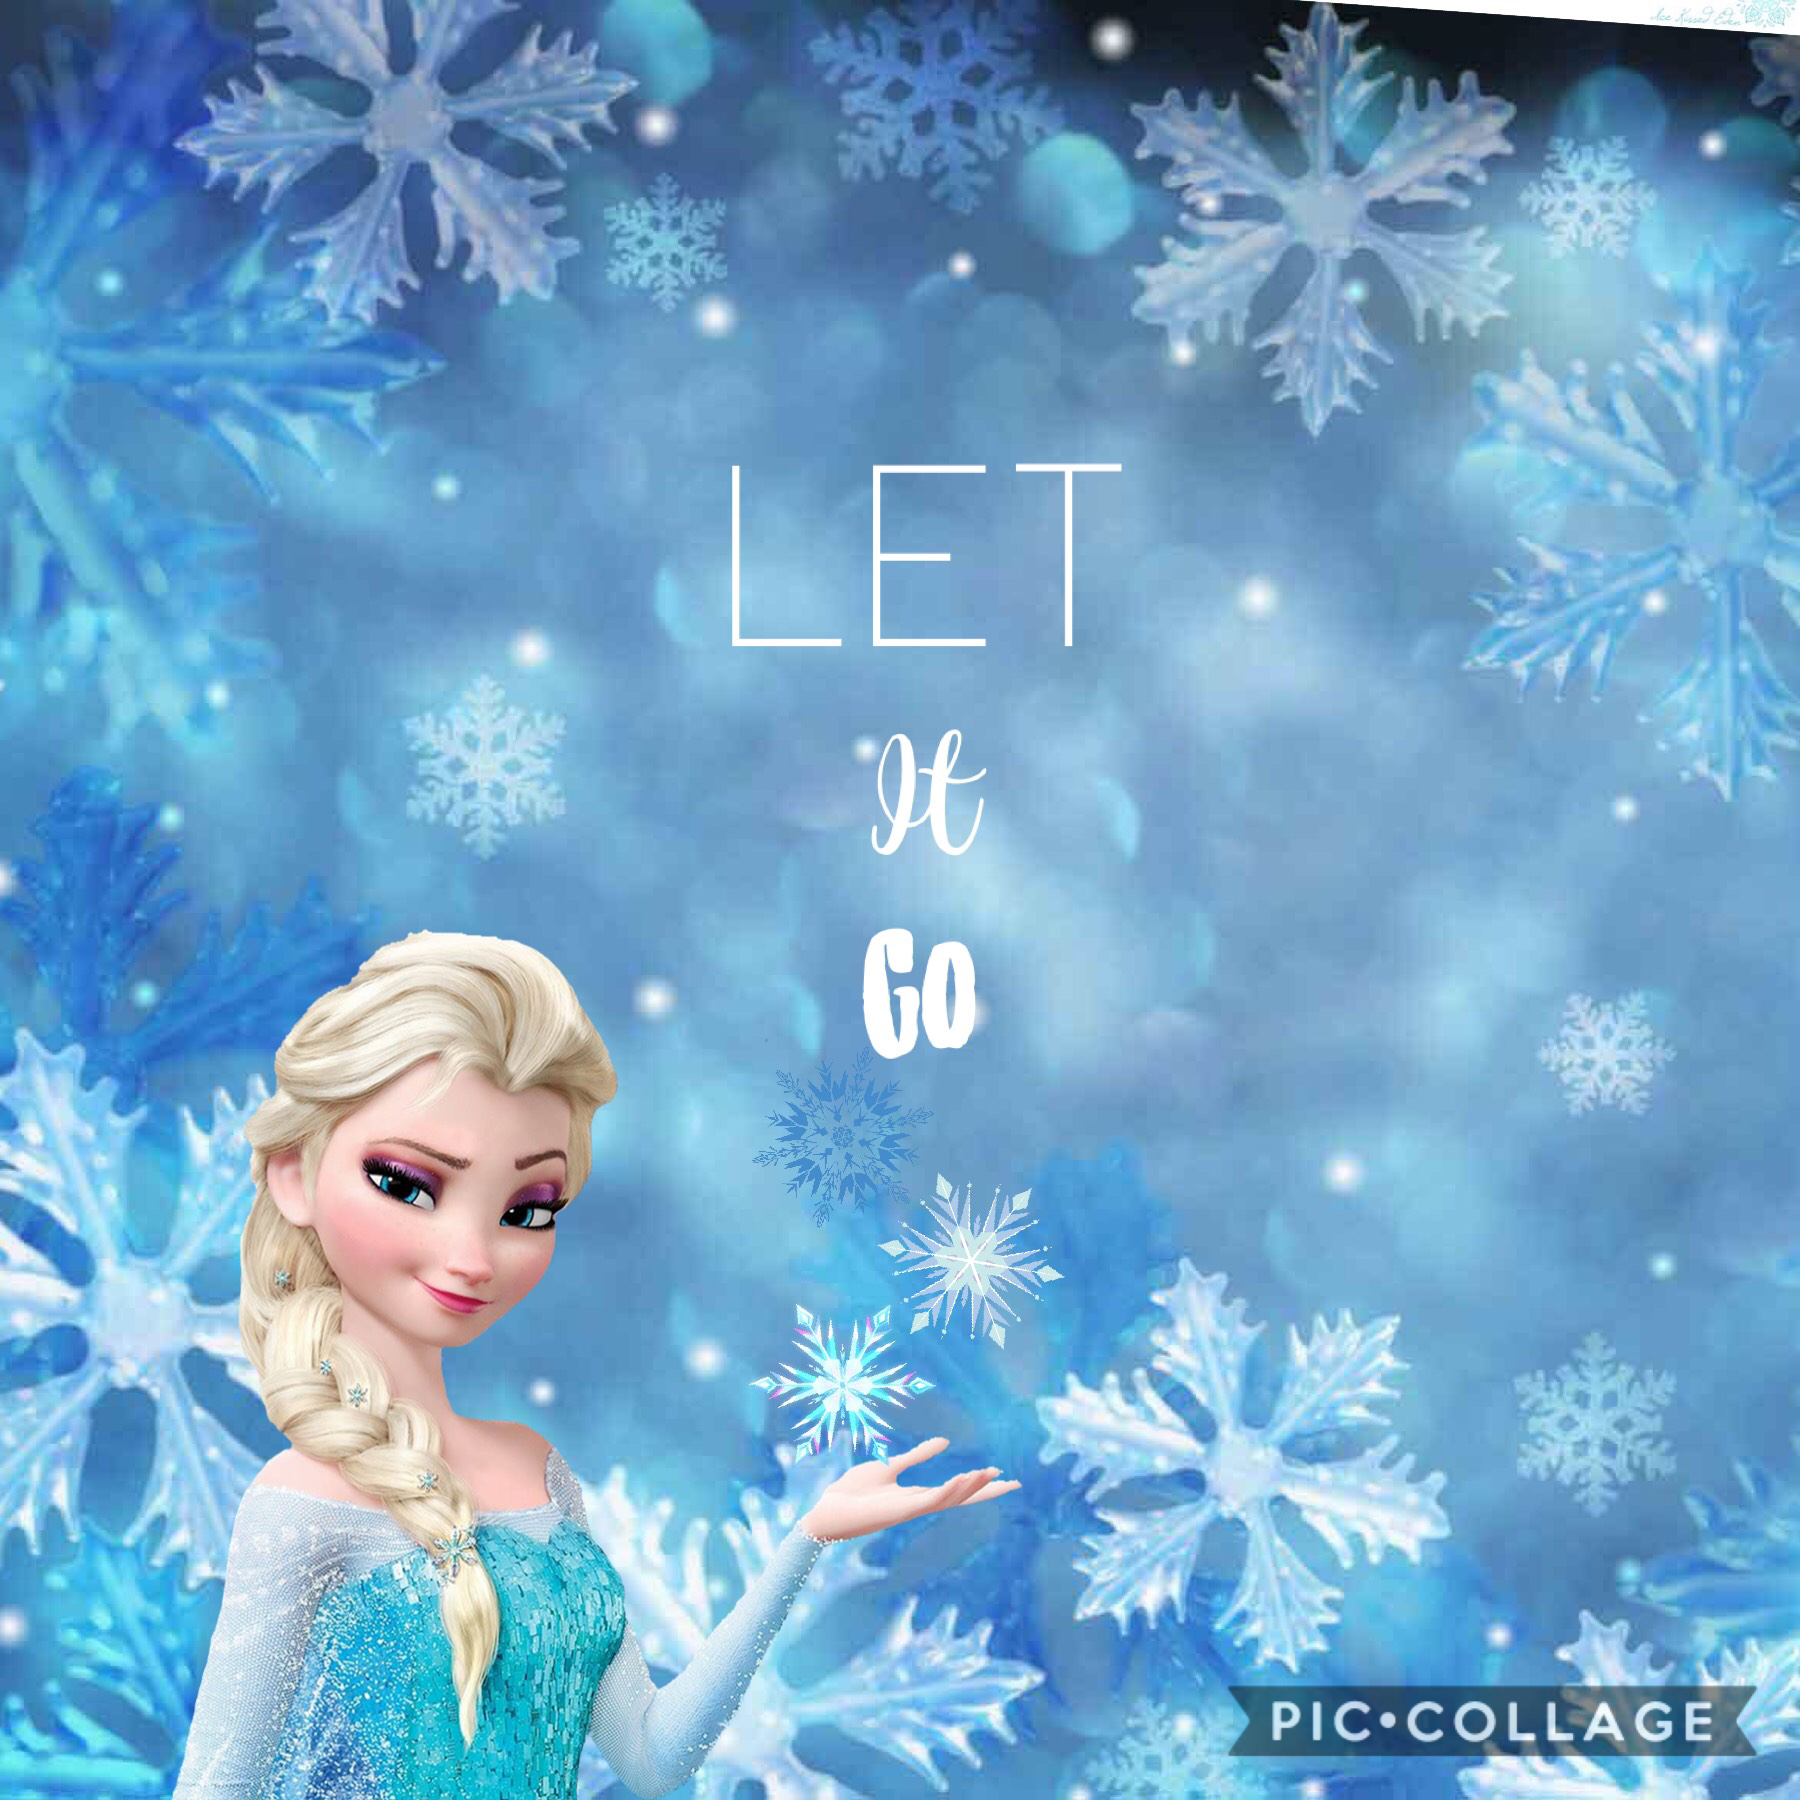 Let it go 
❄️❄️❄️